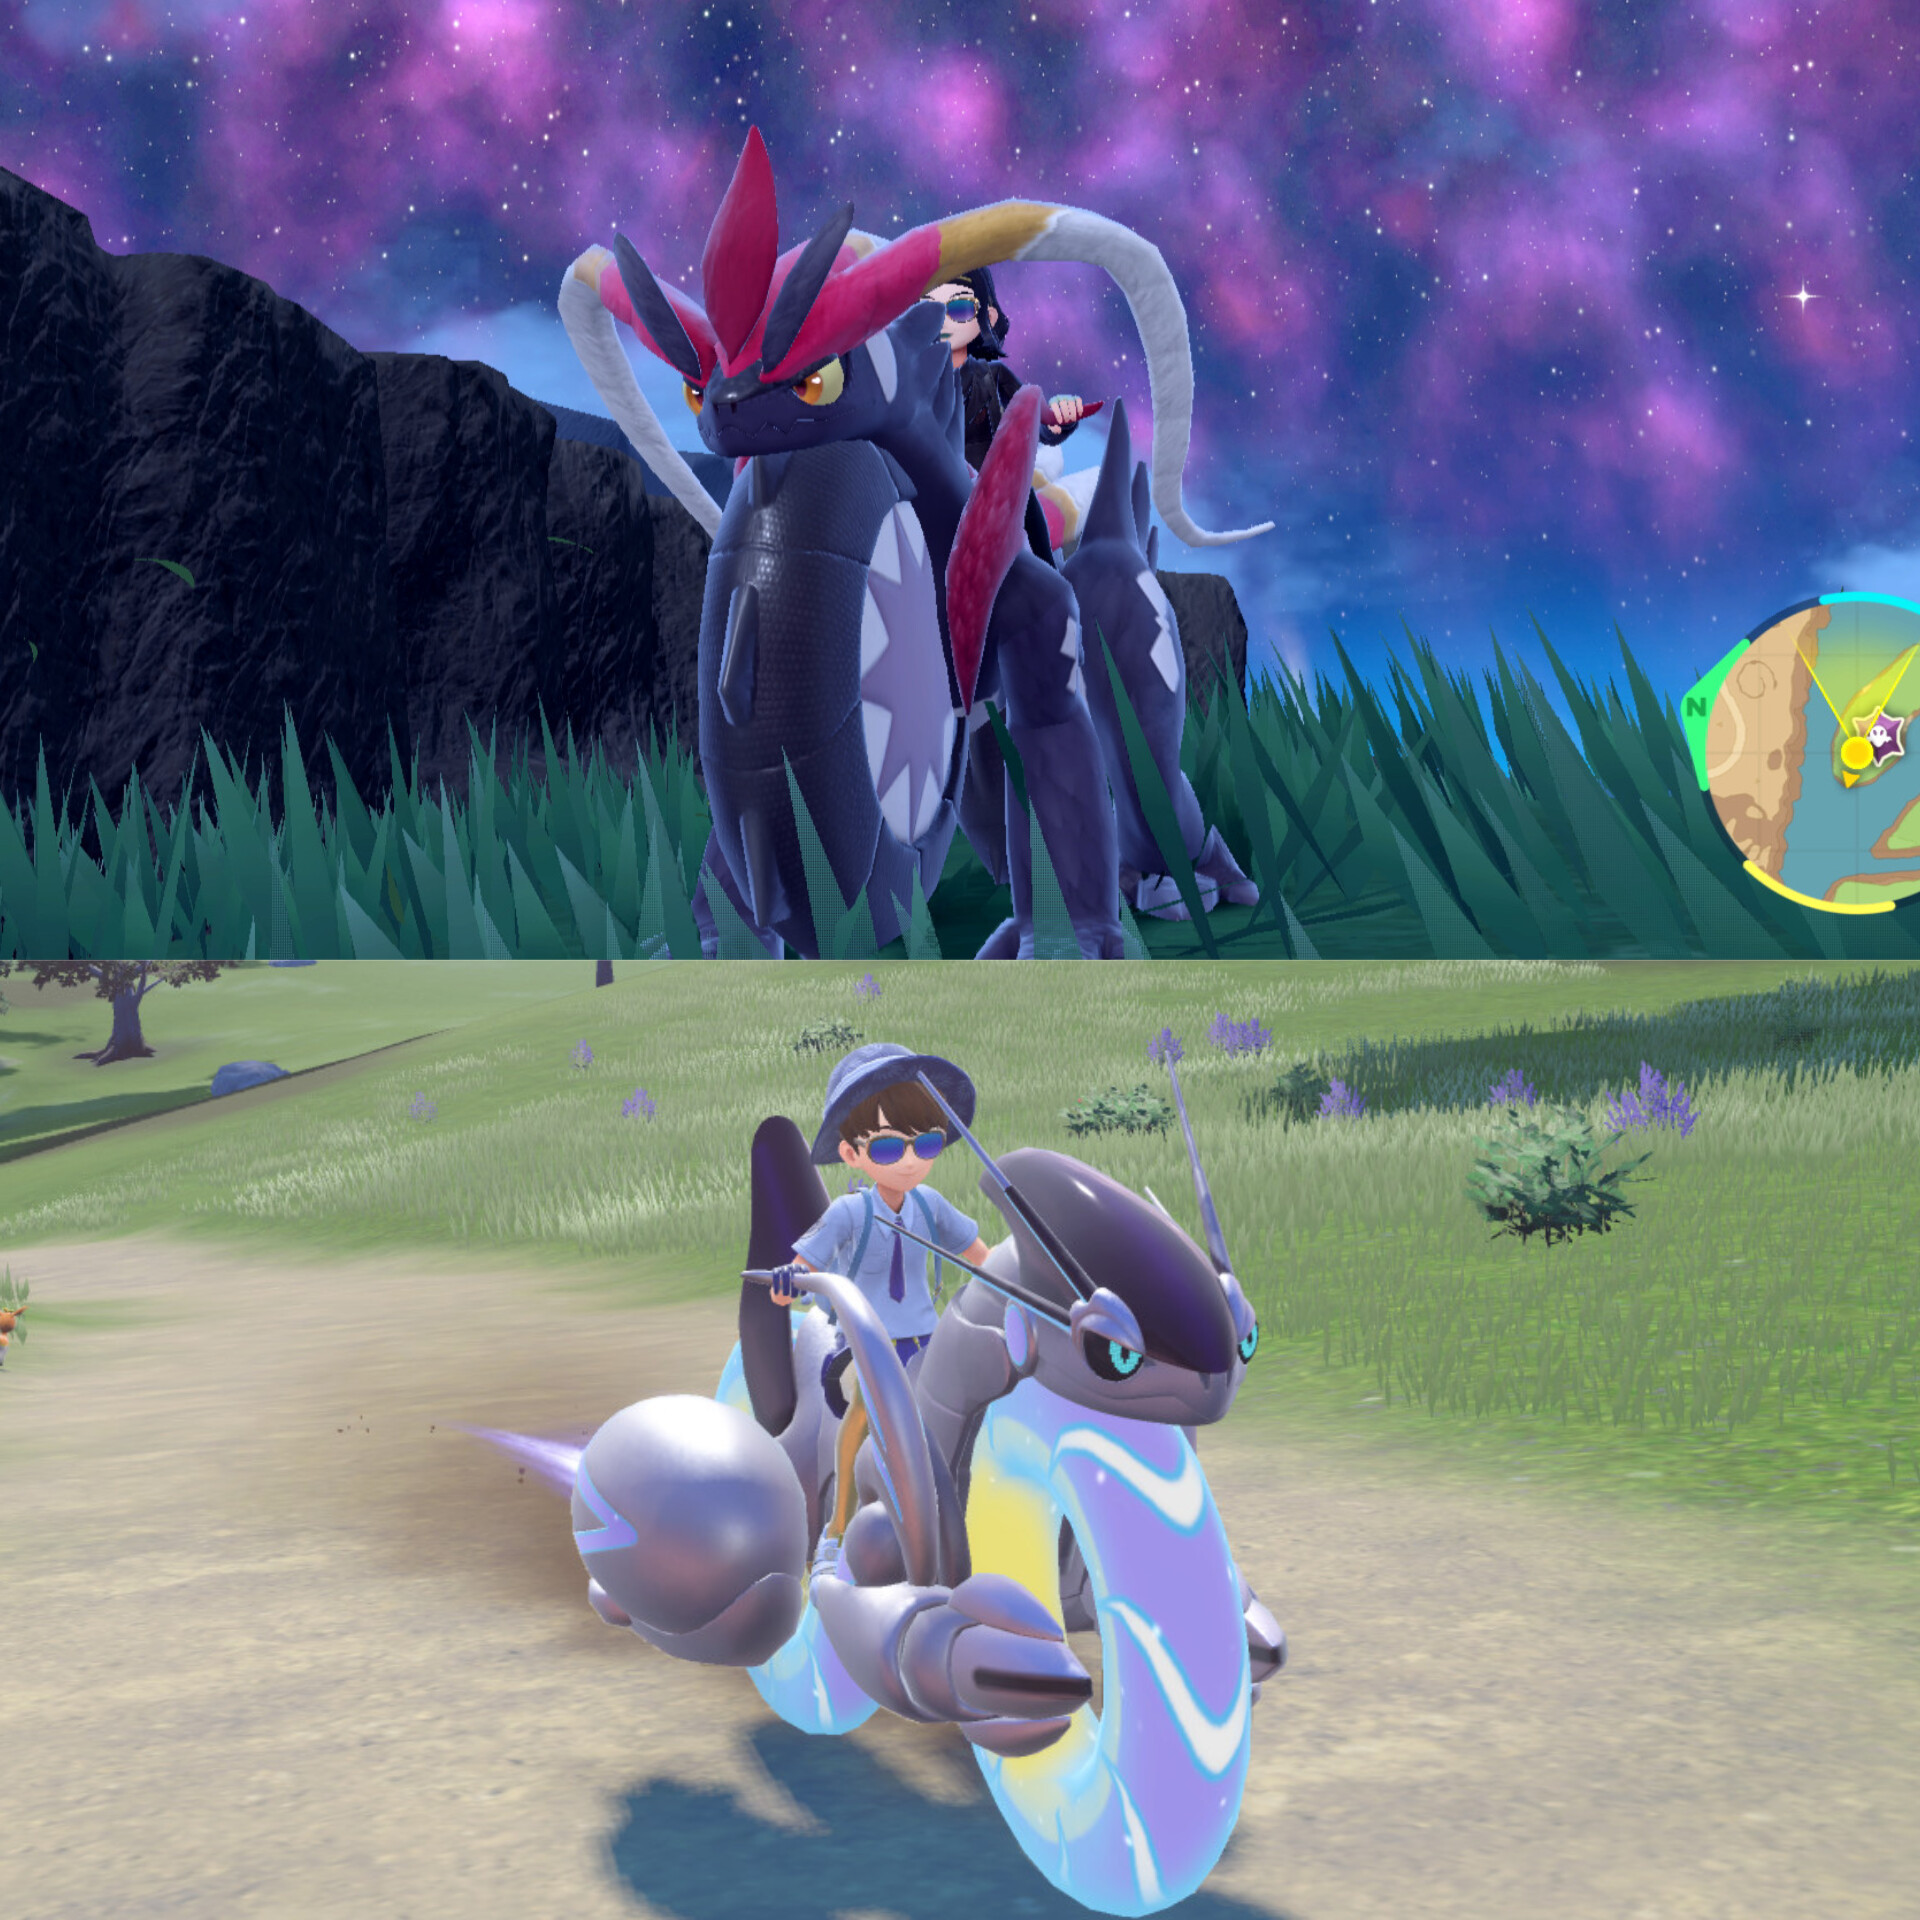 Shiny Miraidon over battle and ride form [Pokemon Scarlet & Violet] [Mods]